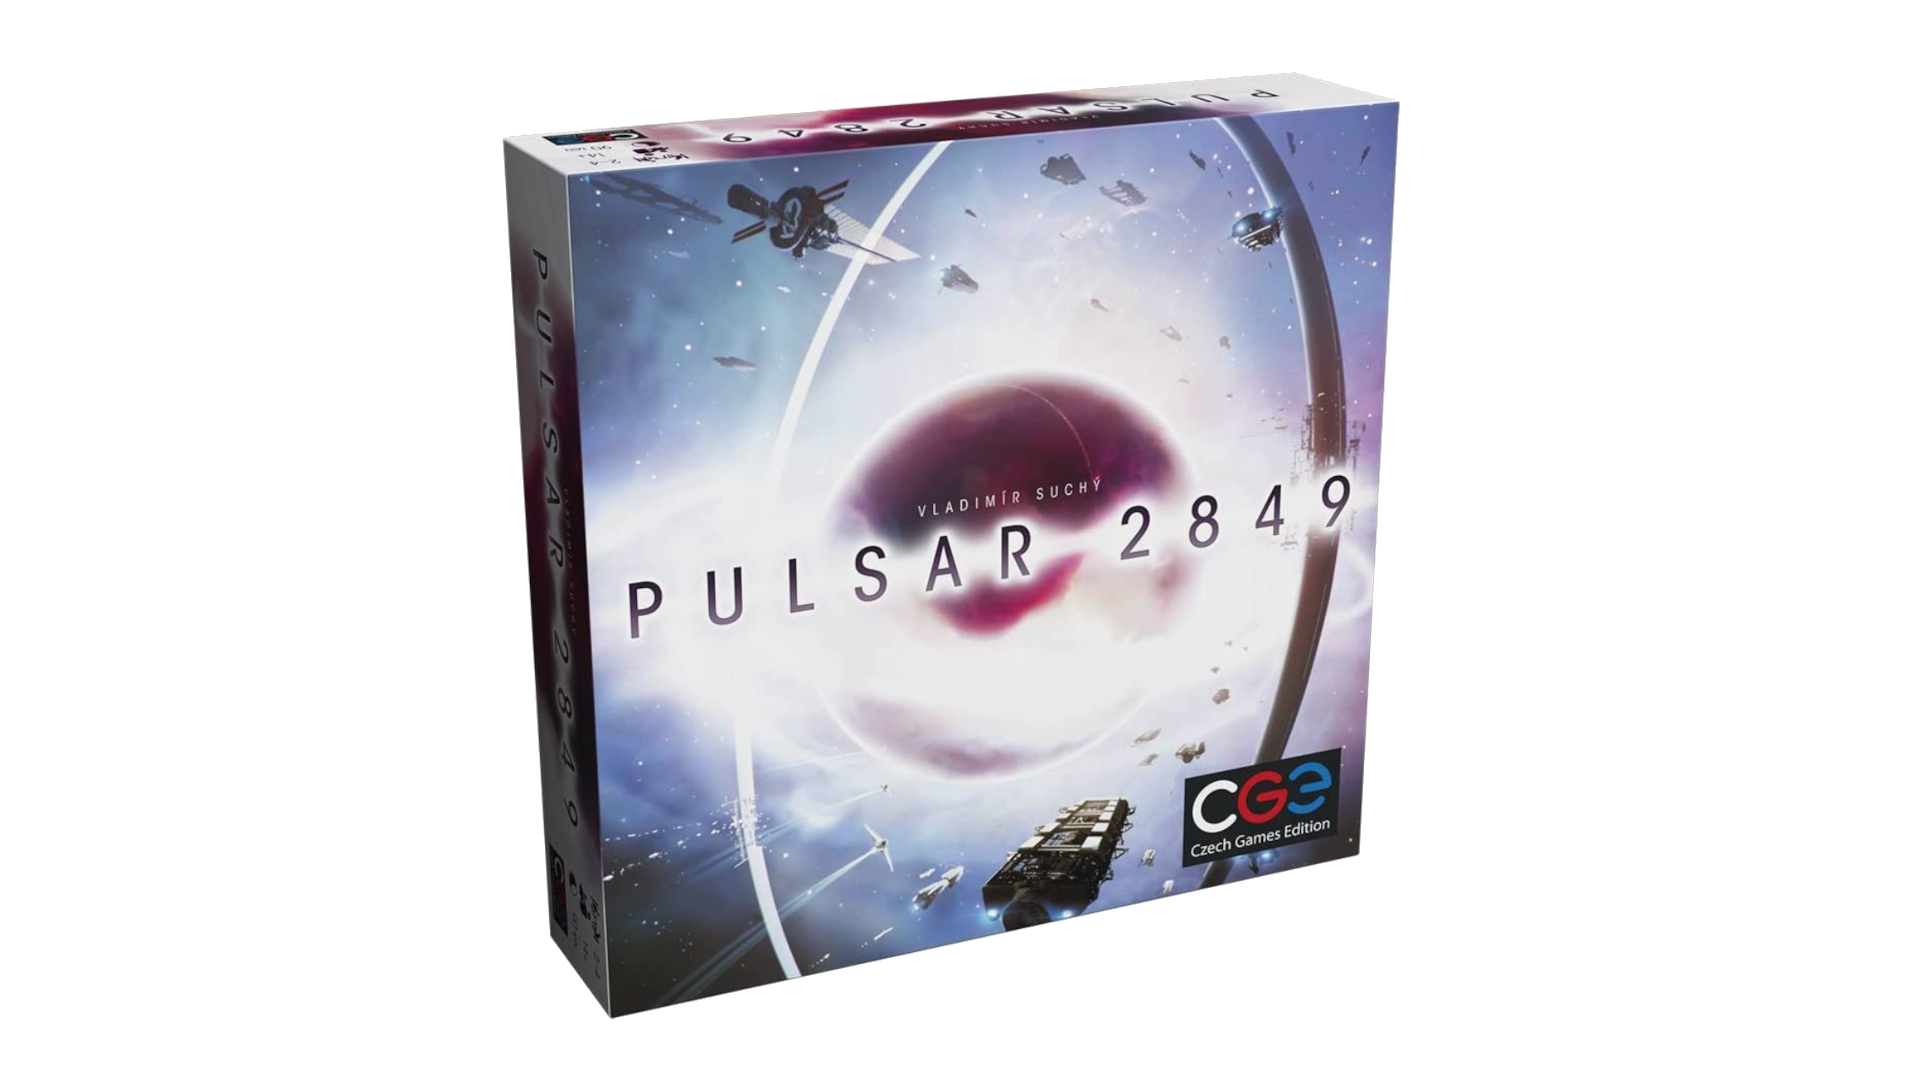 Pulsar 2849 (CGE, 2018)